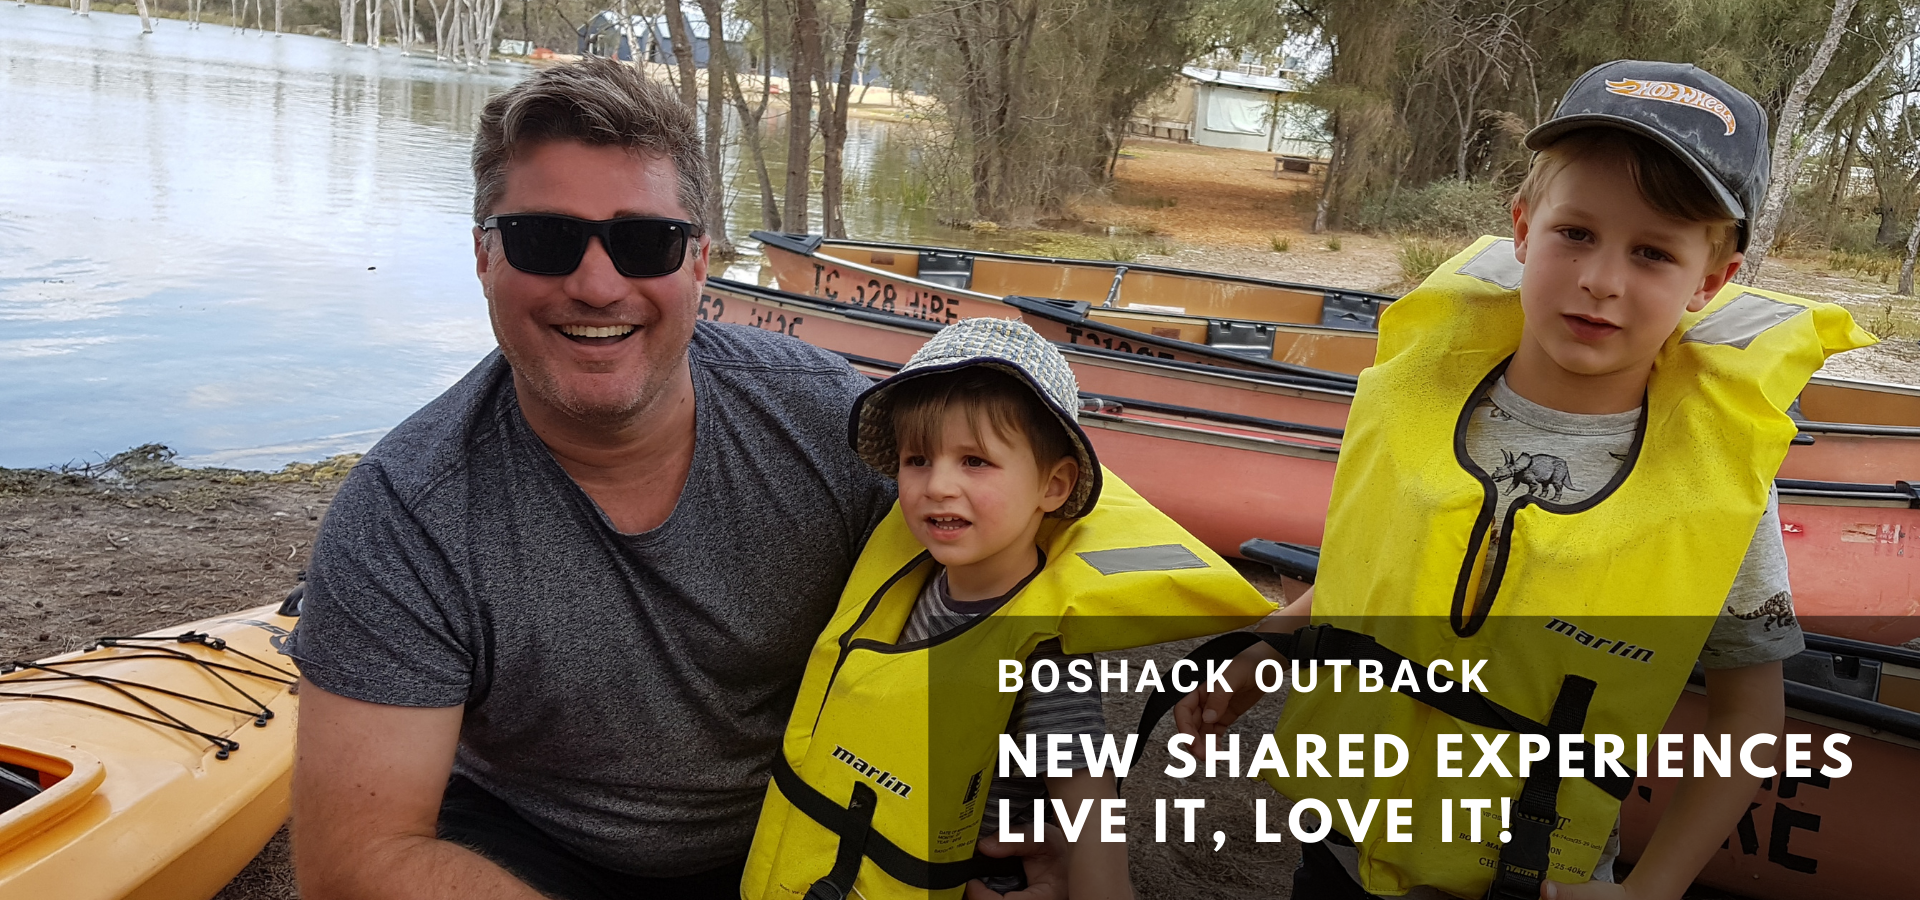 Extraordinary experiences at Boshack Outback